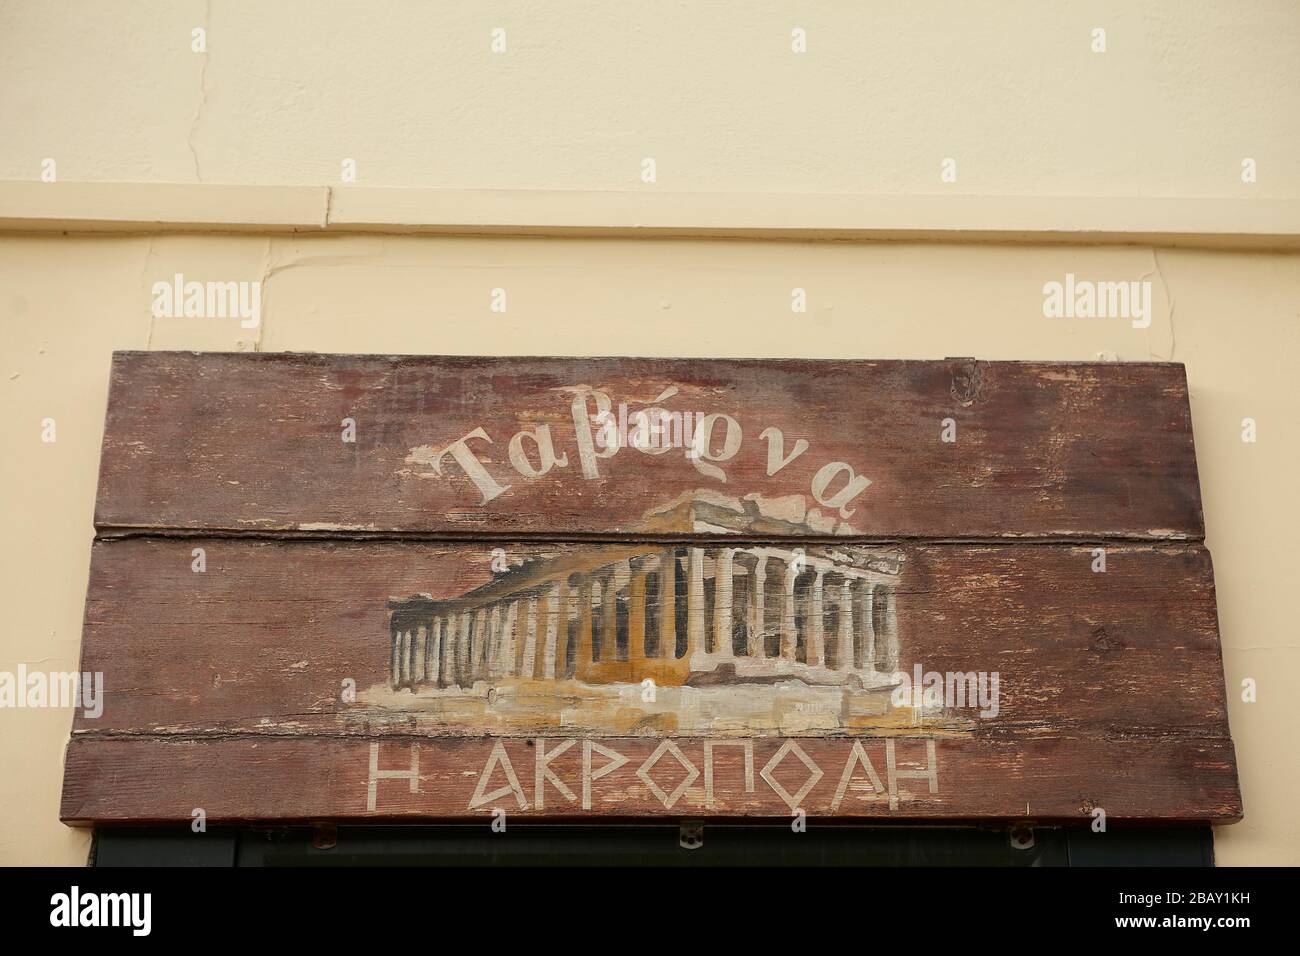 acropolis taverna sign at plaka Athens greece Stock Photo